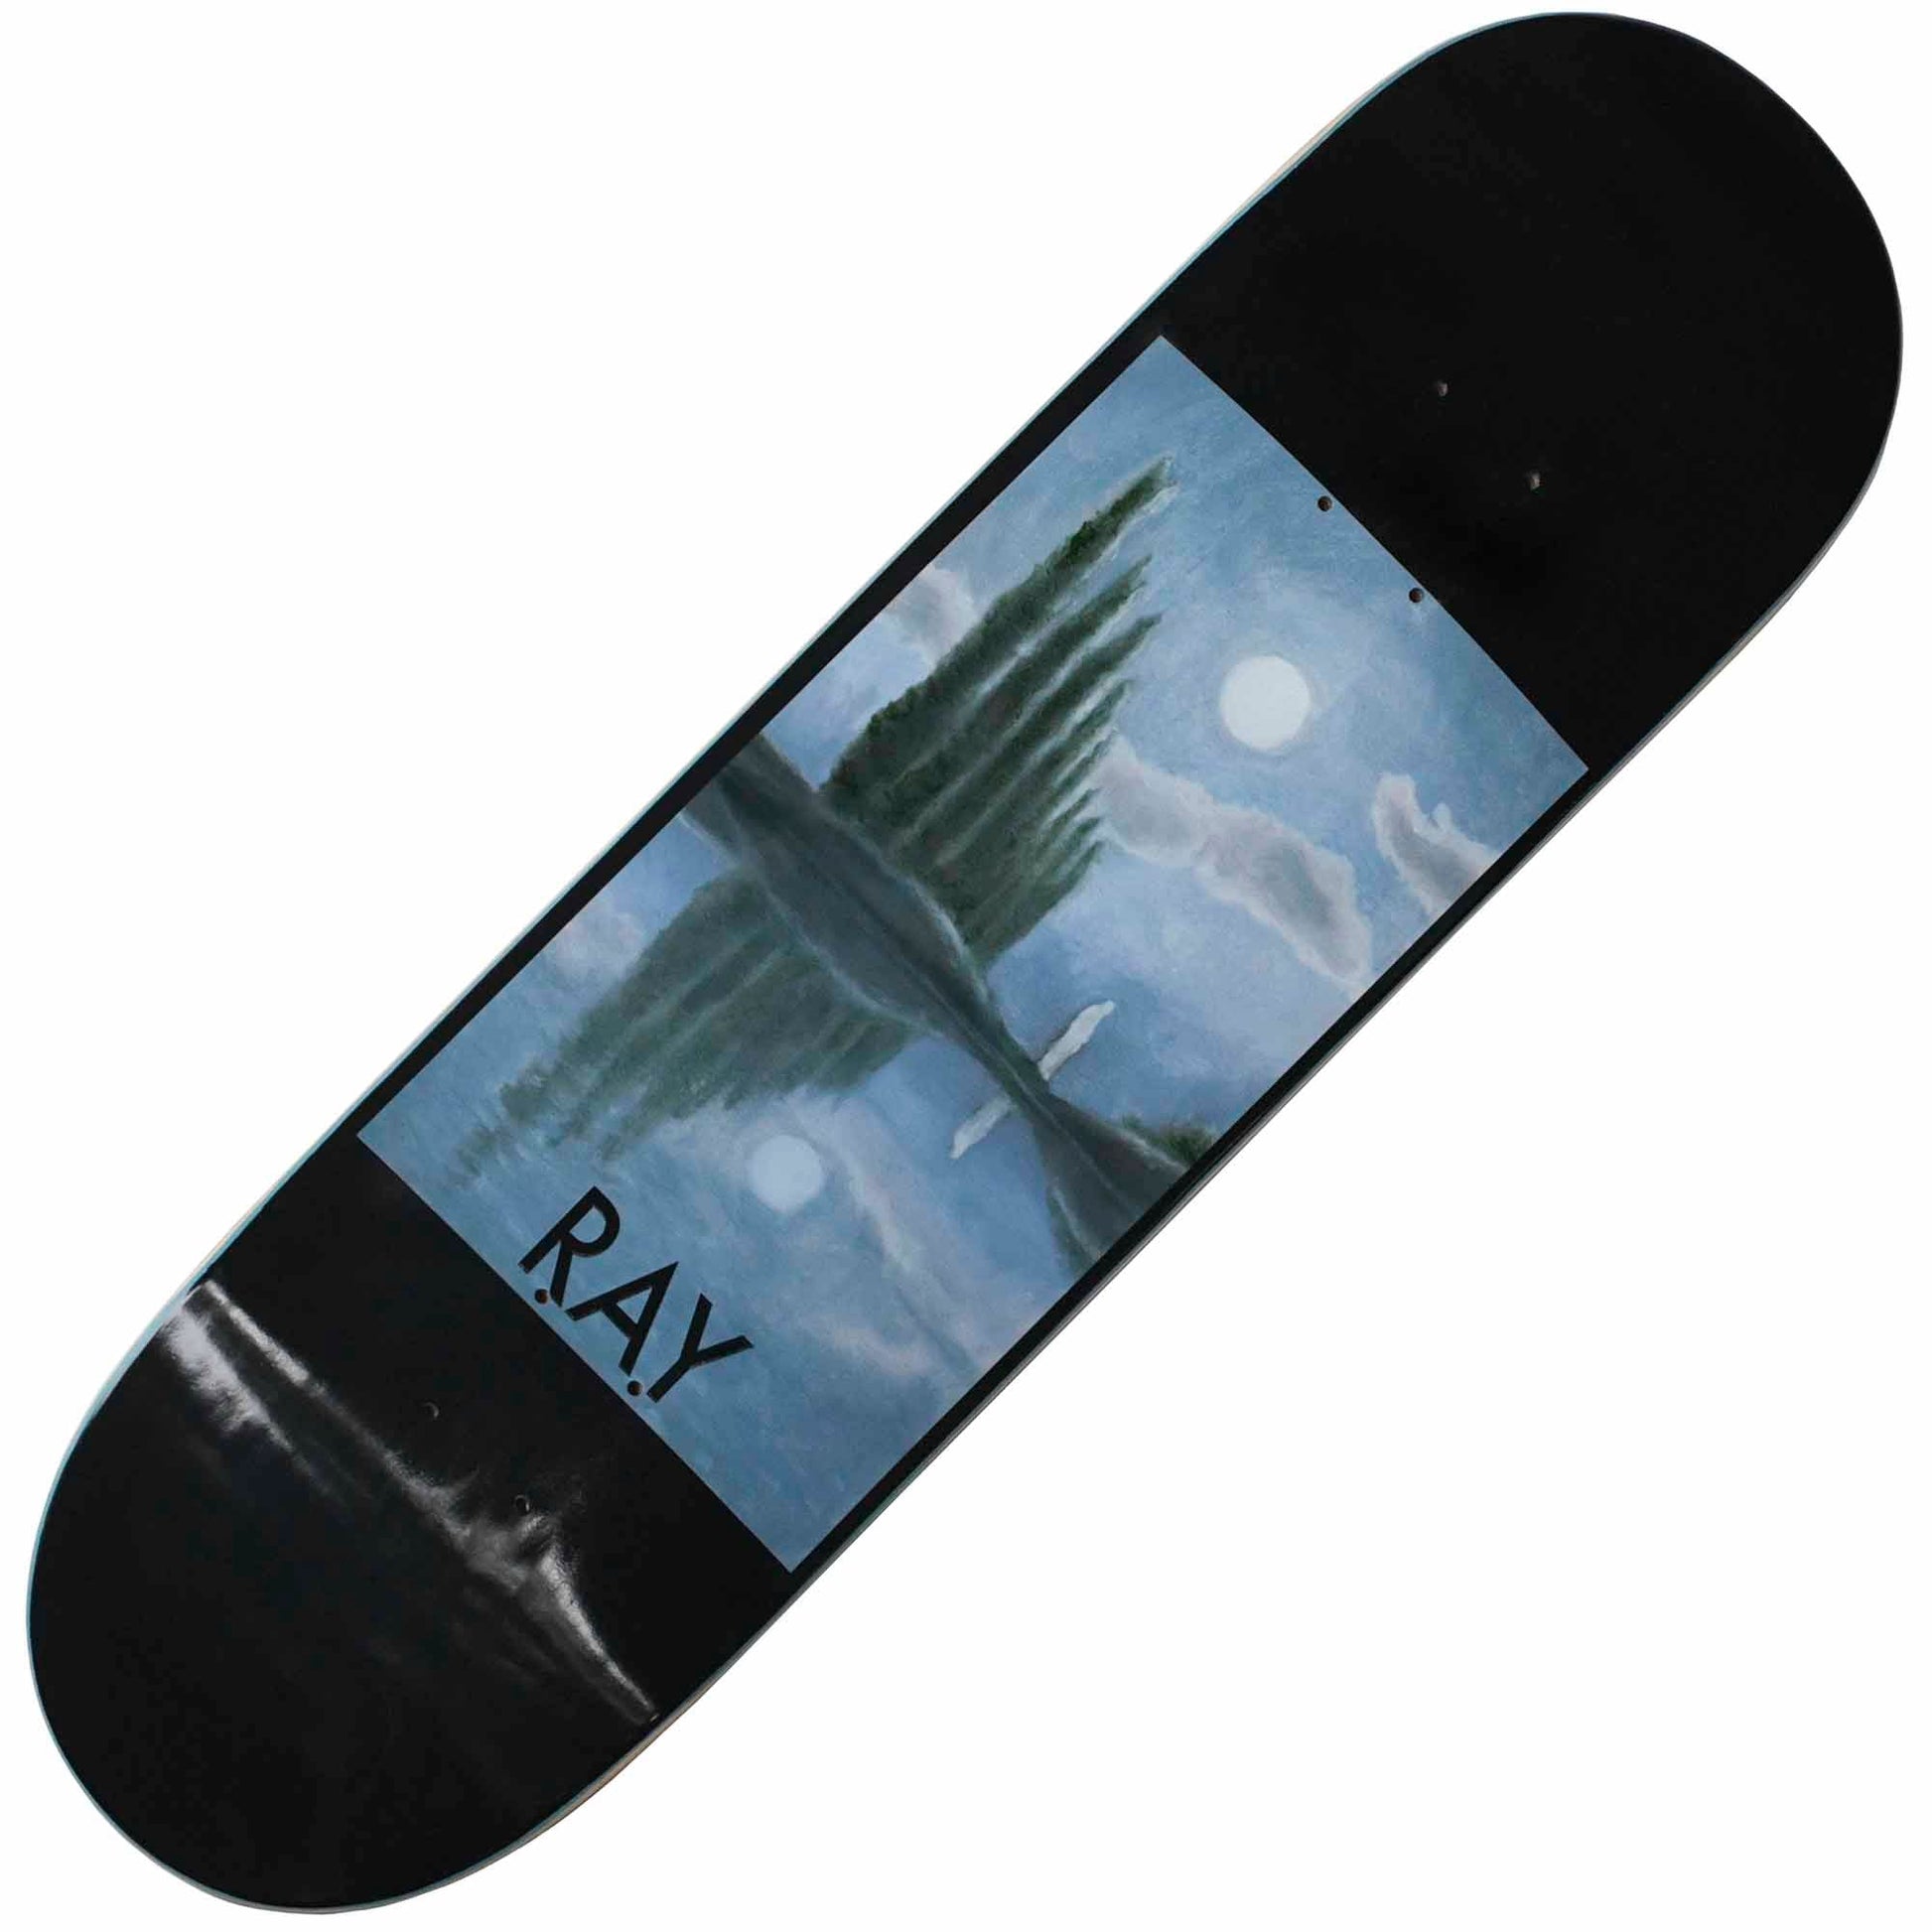 Jenny Mikey Ray Death Deck (8.5") - Tiki Room Skateboards - 1